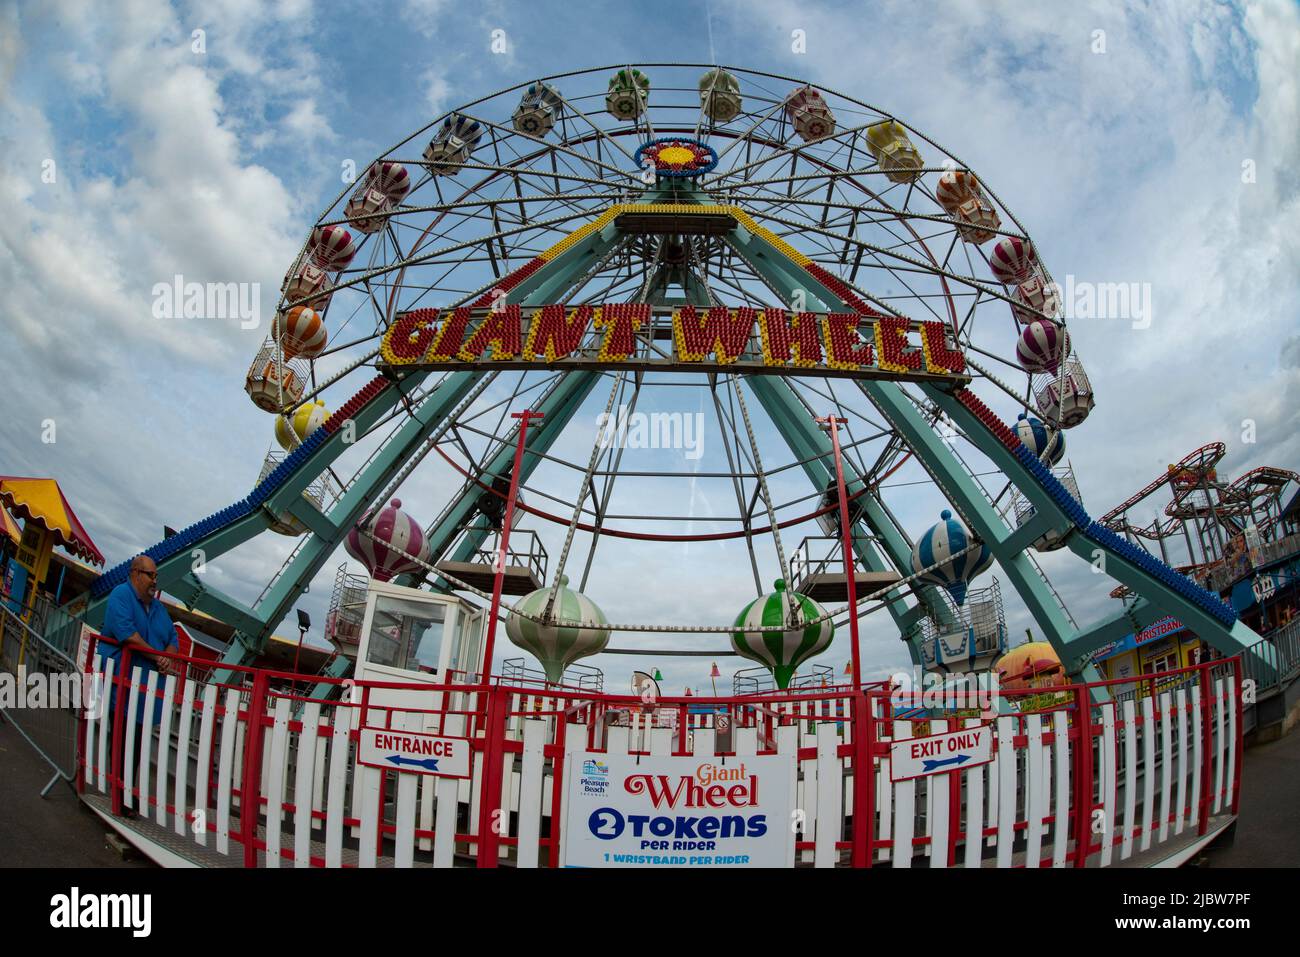 Giant Wheel Skegness, Bottons Pleasure Beach, Skegness, Lincolnshire. Seaside Fairground Ride Stock Photo